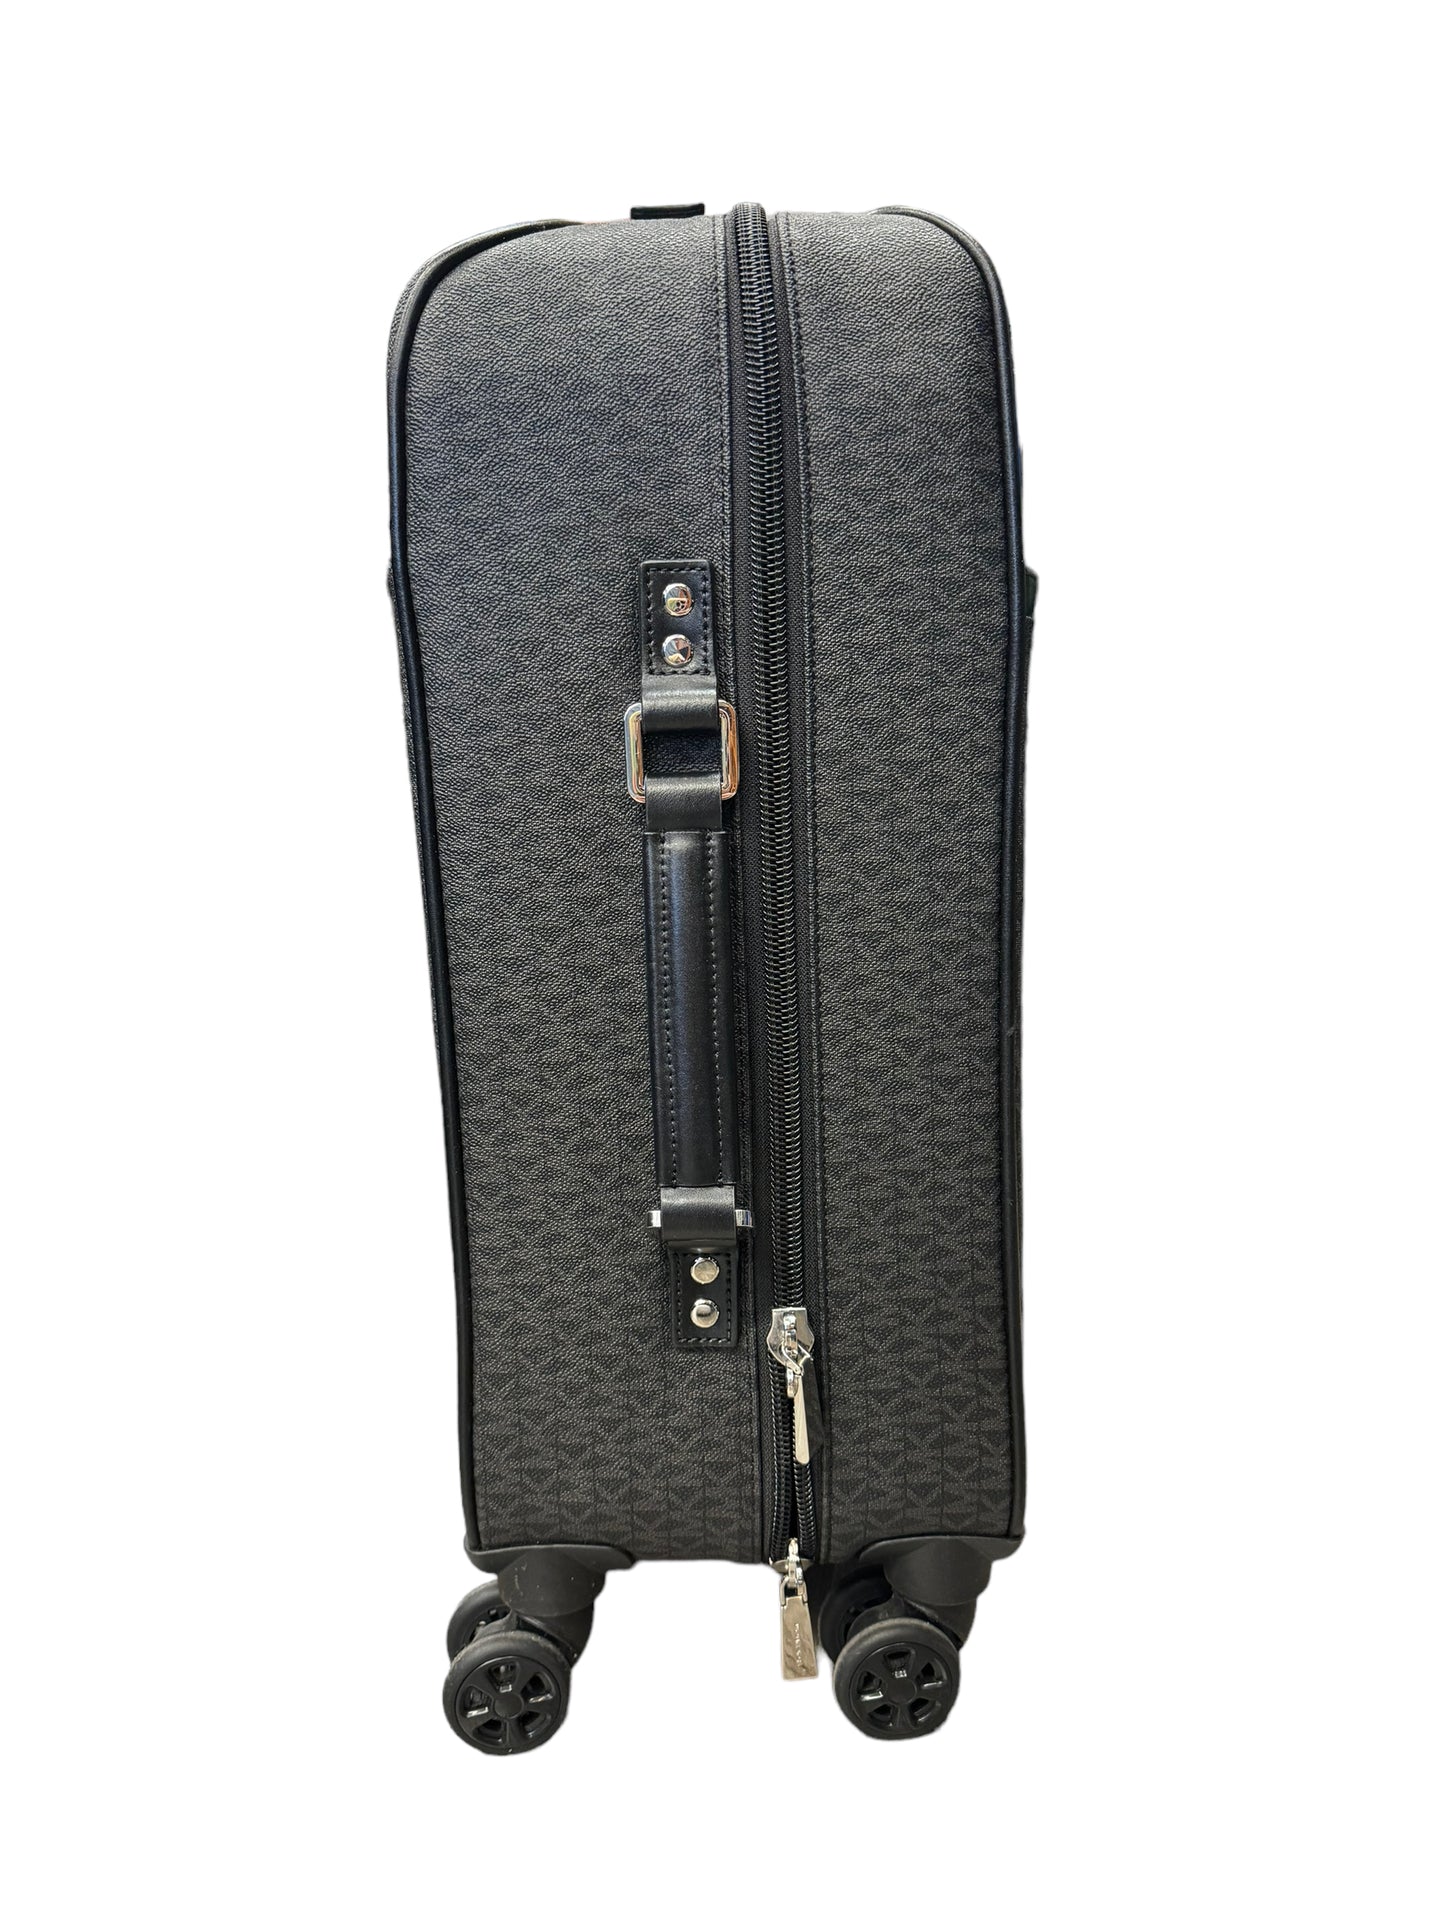 Luggage Designer By Michael Kors  Size: Medium